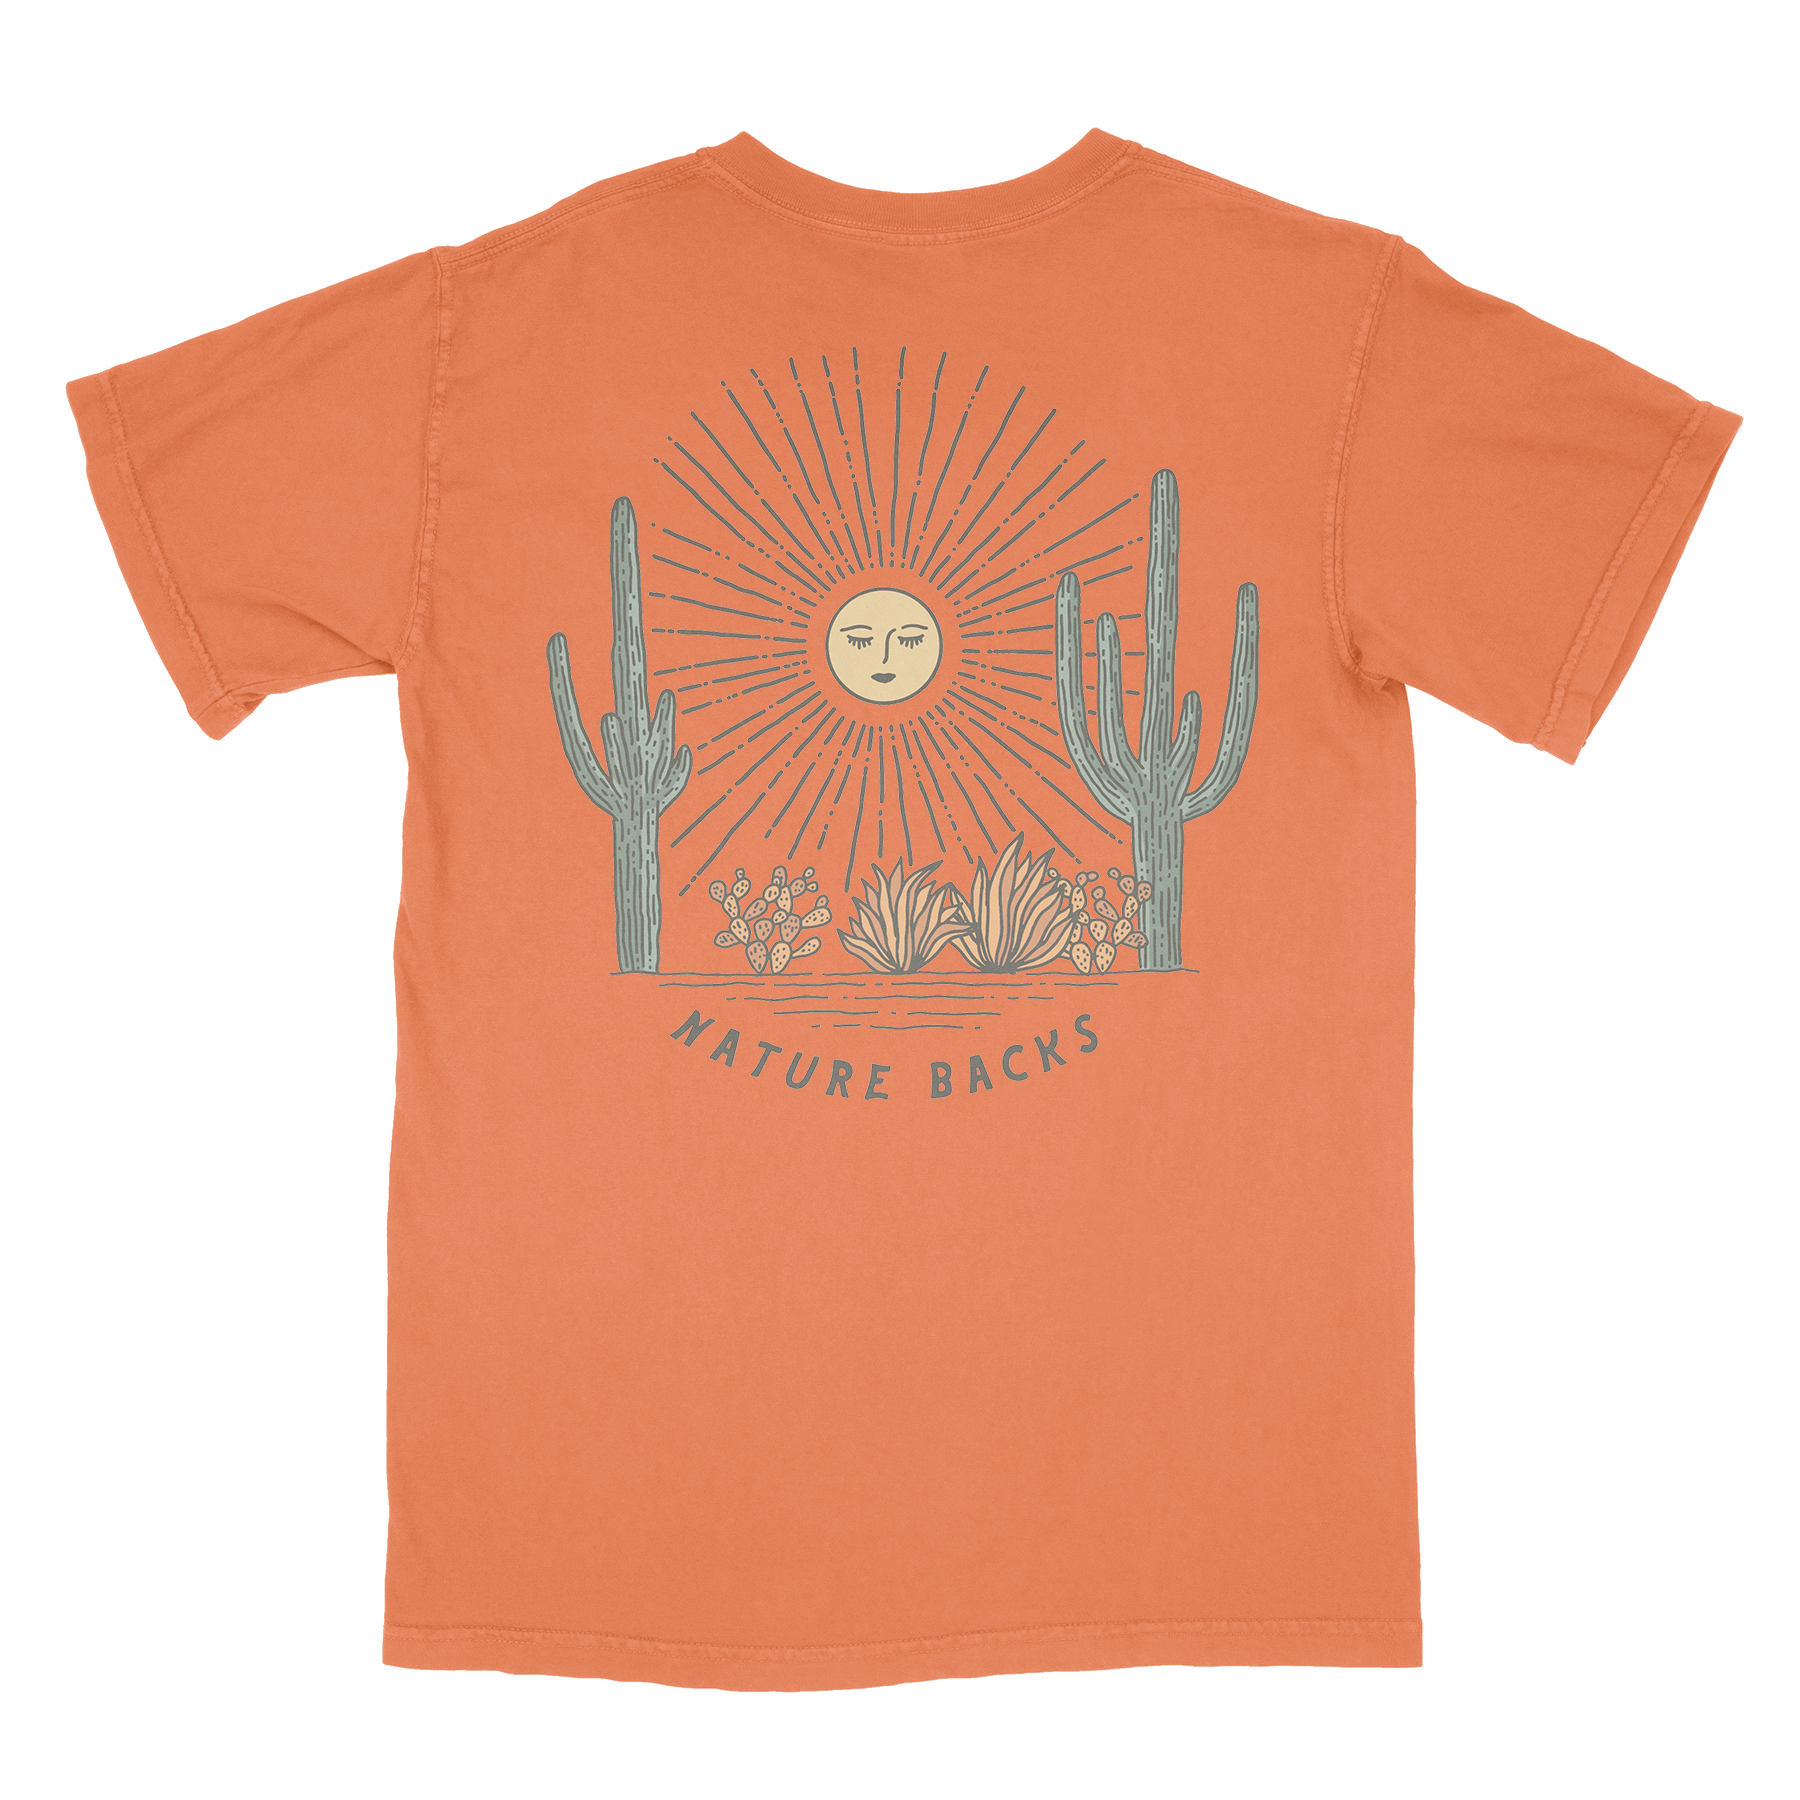 Nature Backs Comfort Colors Saguaro Harvest Short Sleeve T-Shirt | Nature-Inspired Design on Ultra-Soft Fabric